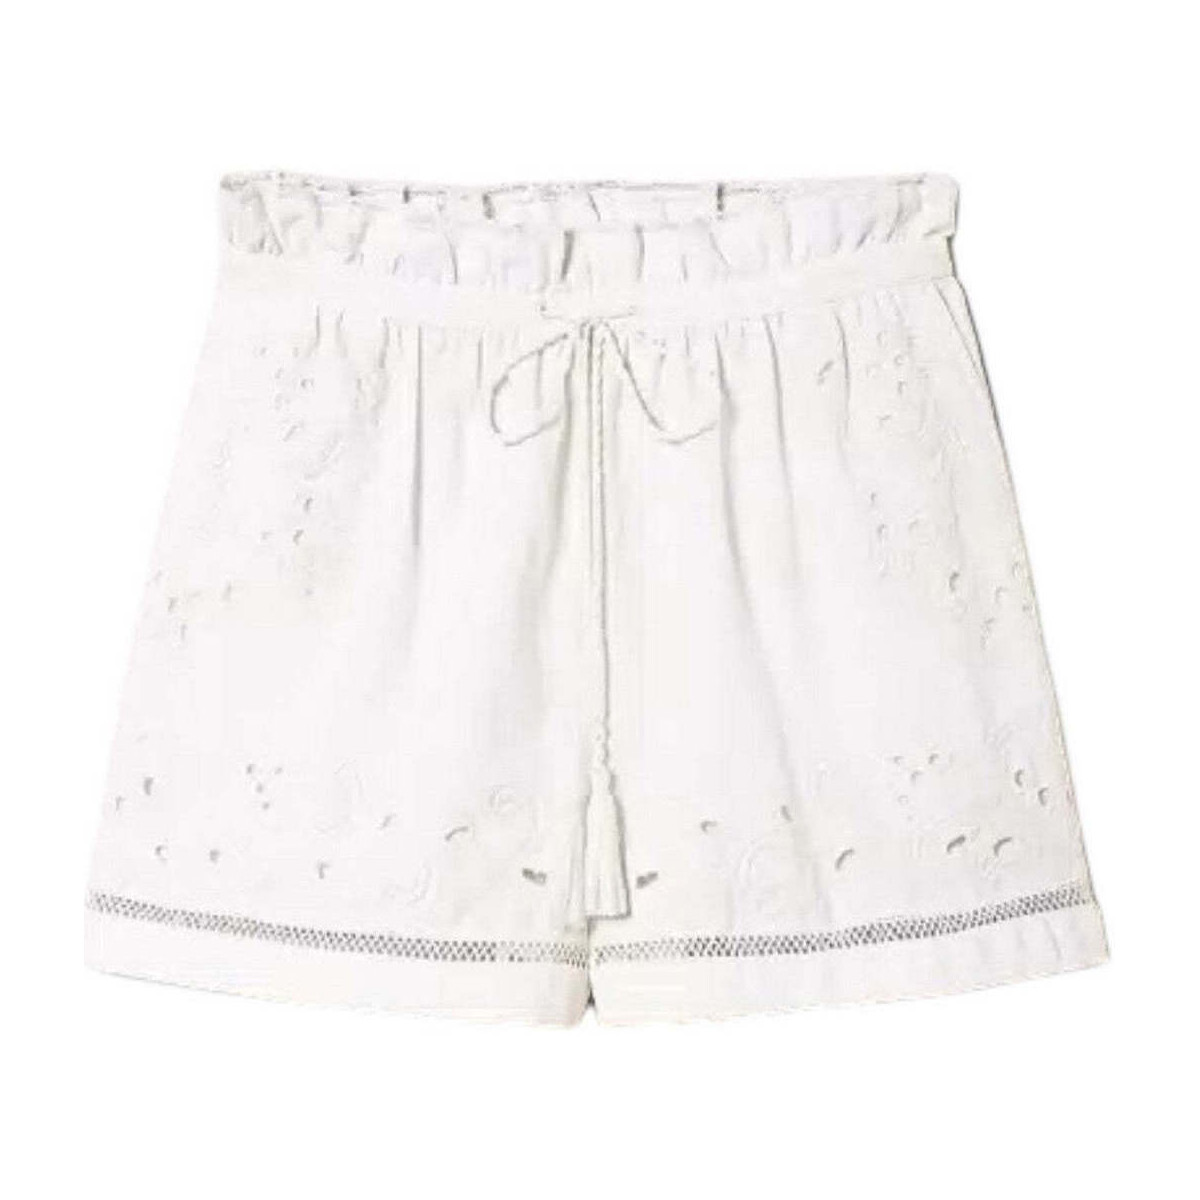 textil Mujer Shorts / Bermudas Twin Set  Blanco